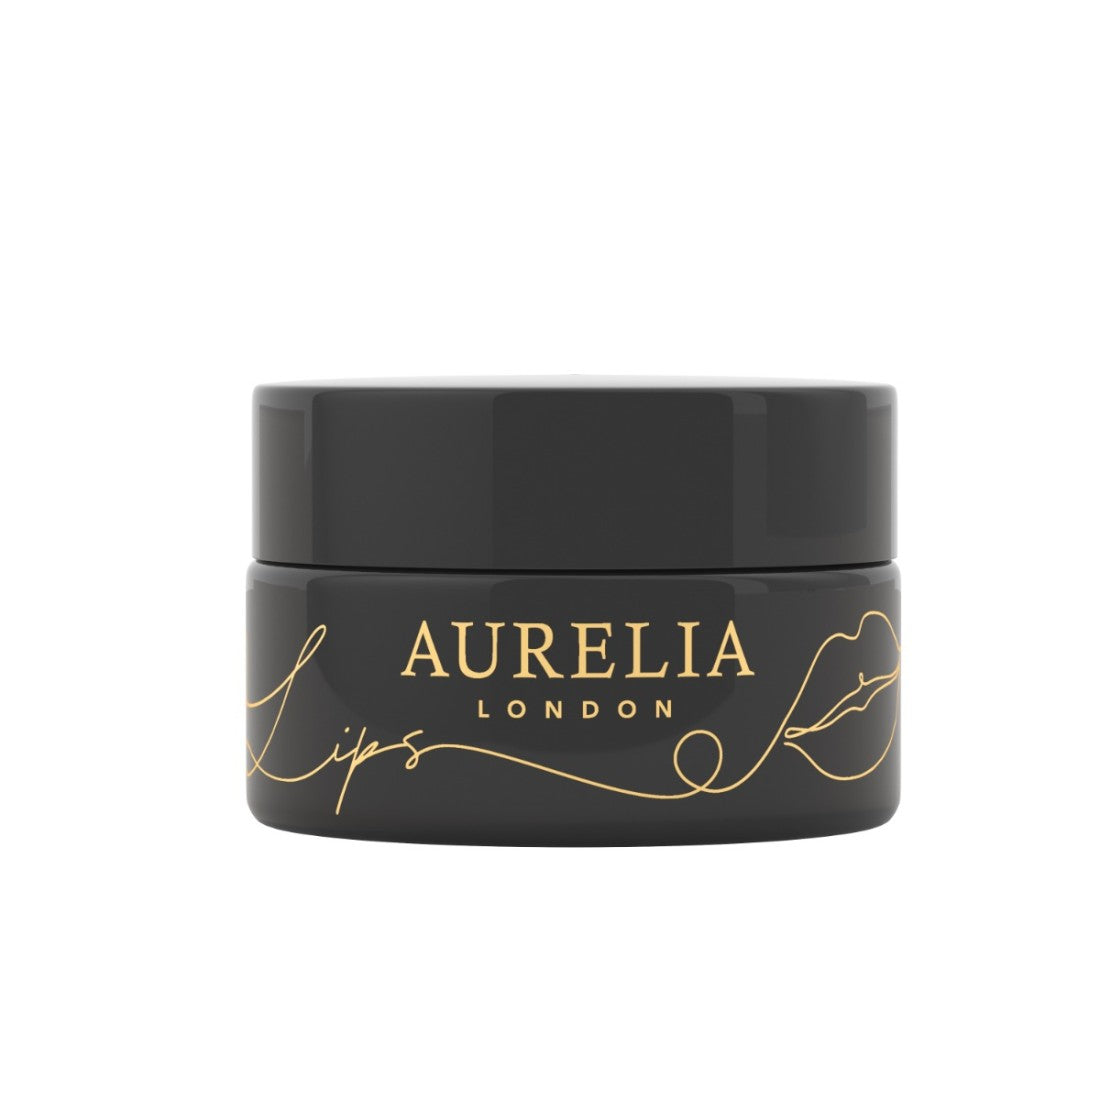 Aurelia London Probiotic Lip Balm - 15g